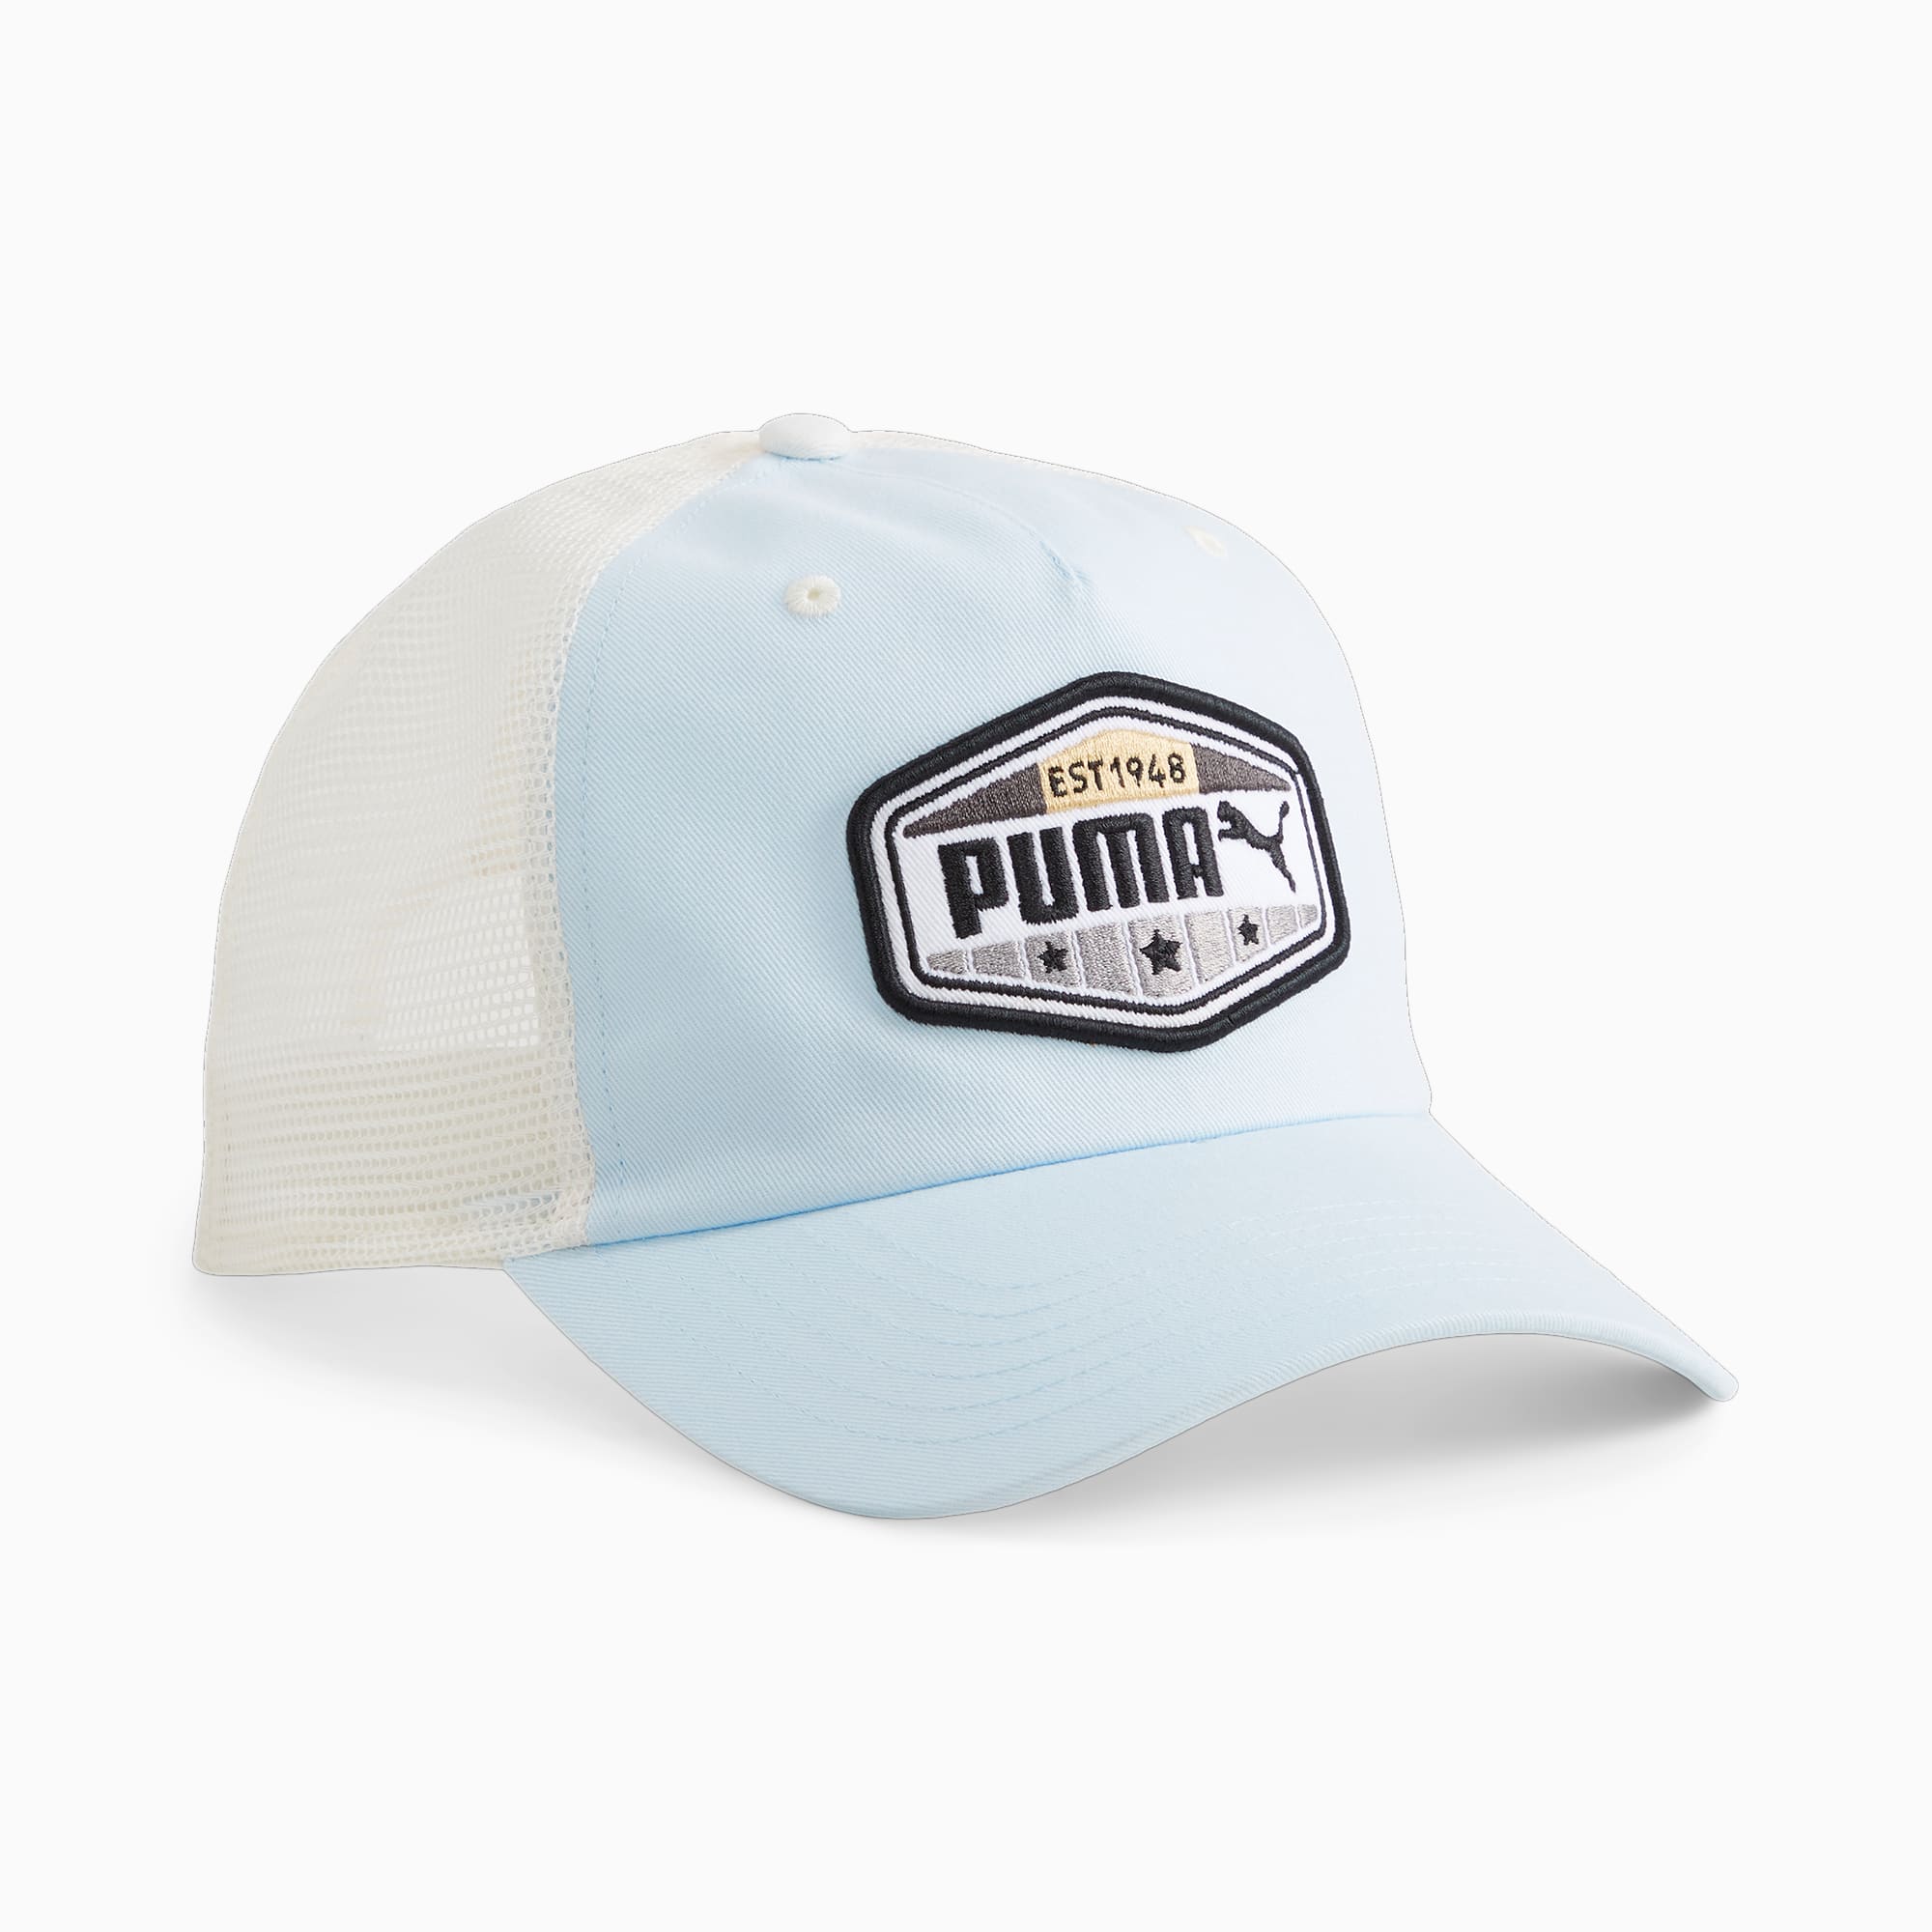 Men's PUMA Trucker Cap, Icy Blue/Warm White